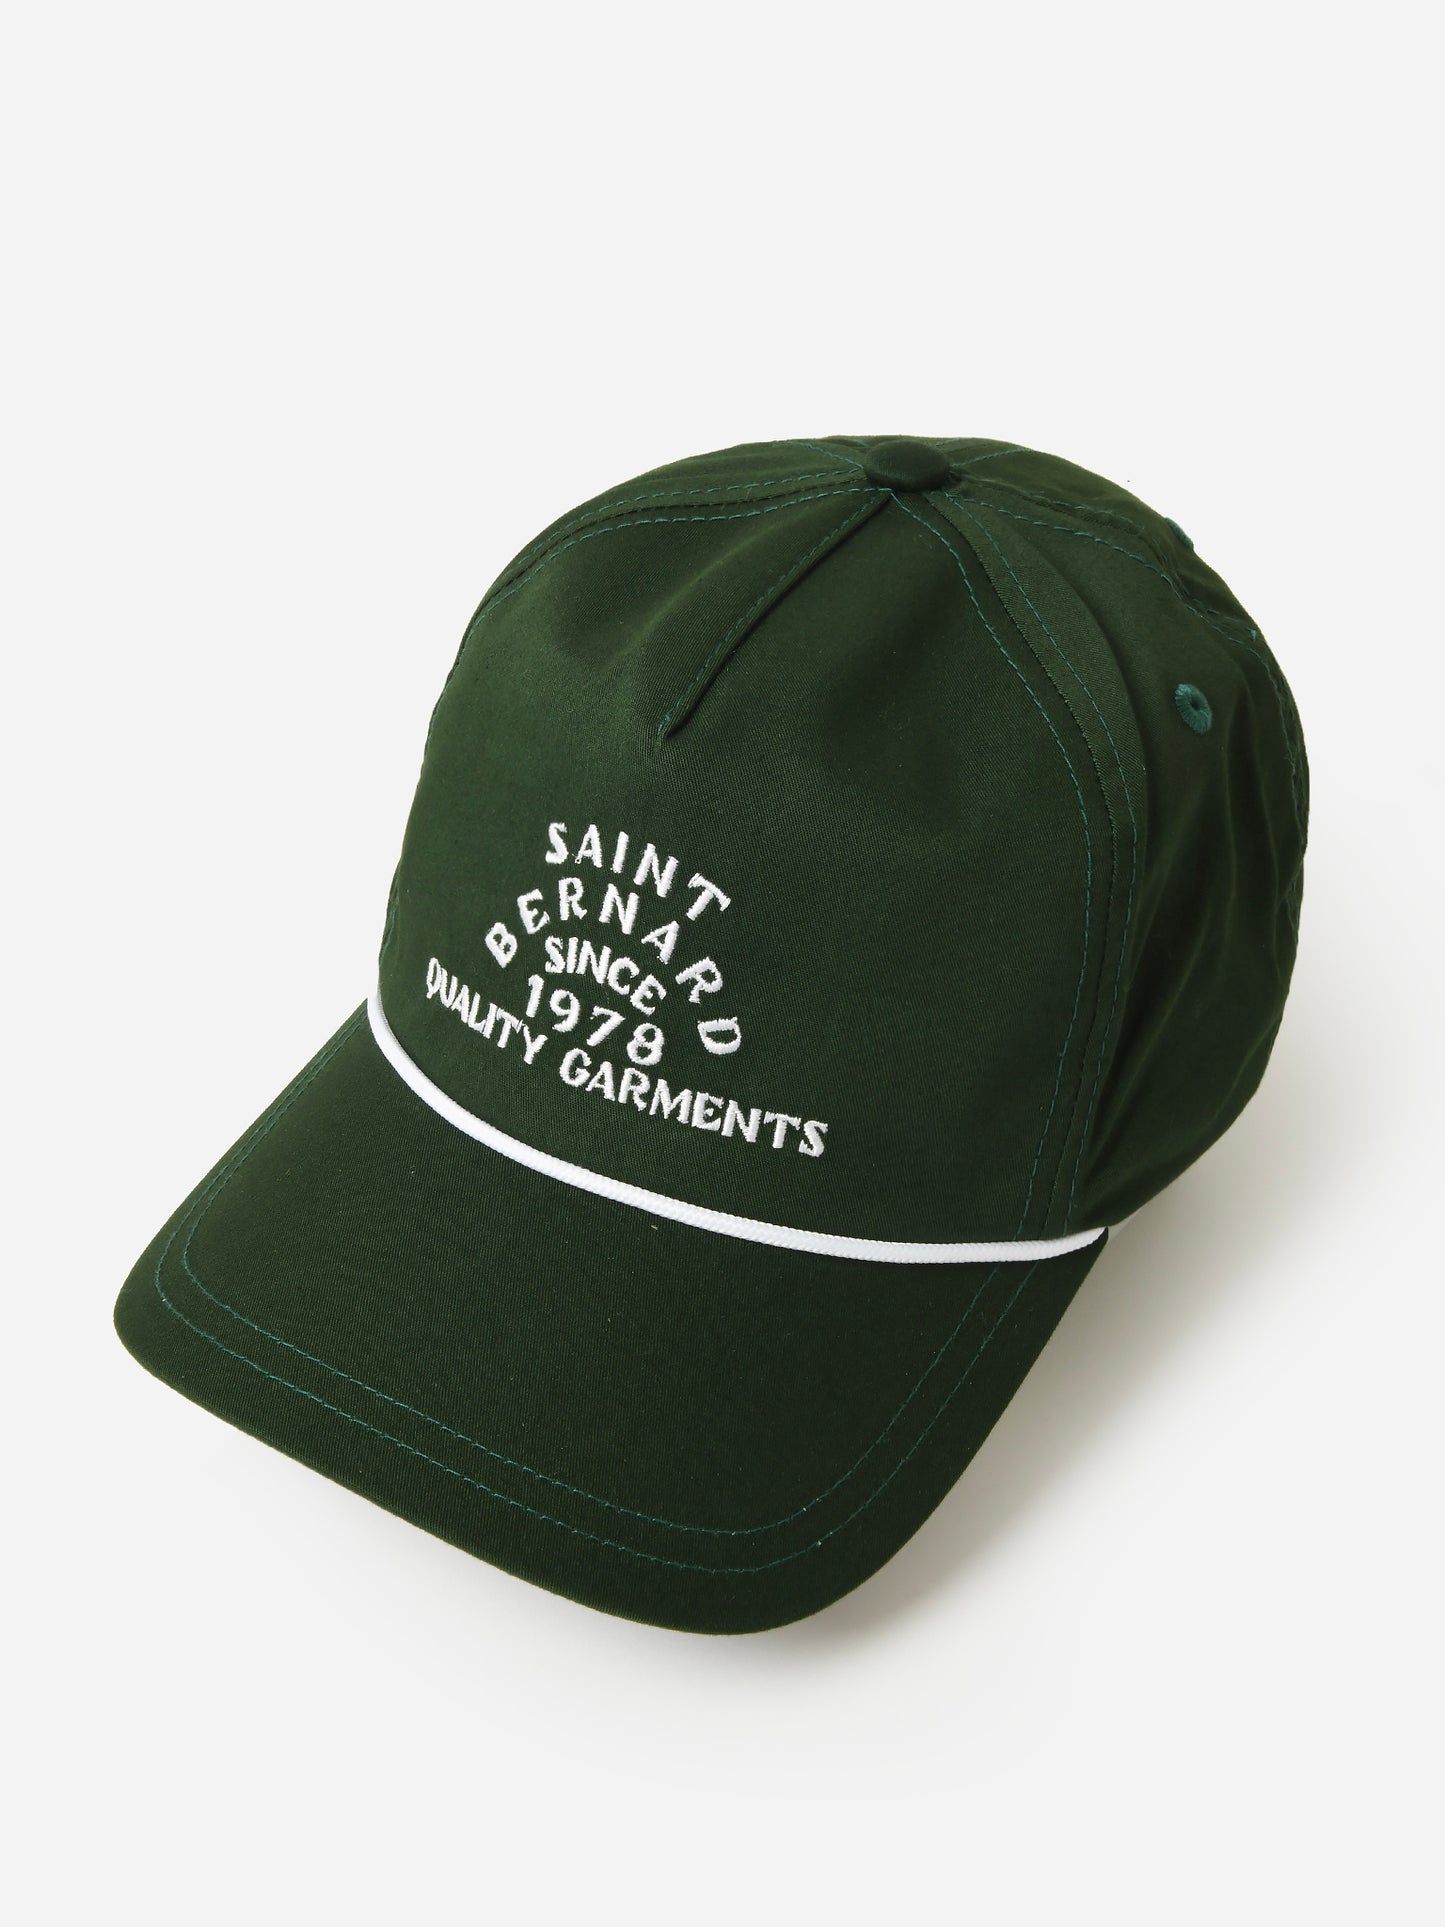 Saint Bernard Quality Garments Lightweight Rope Hat